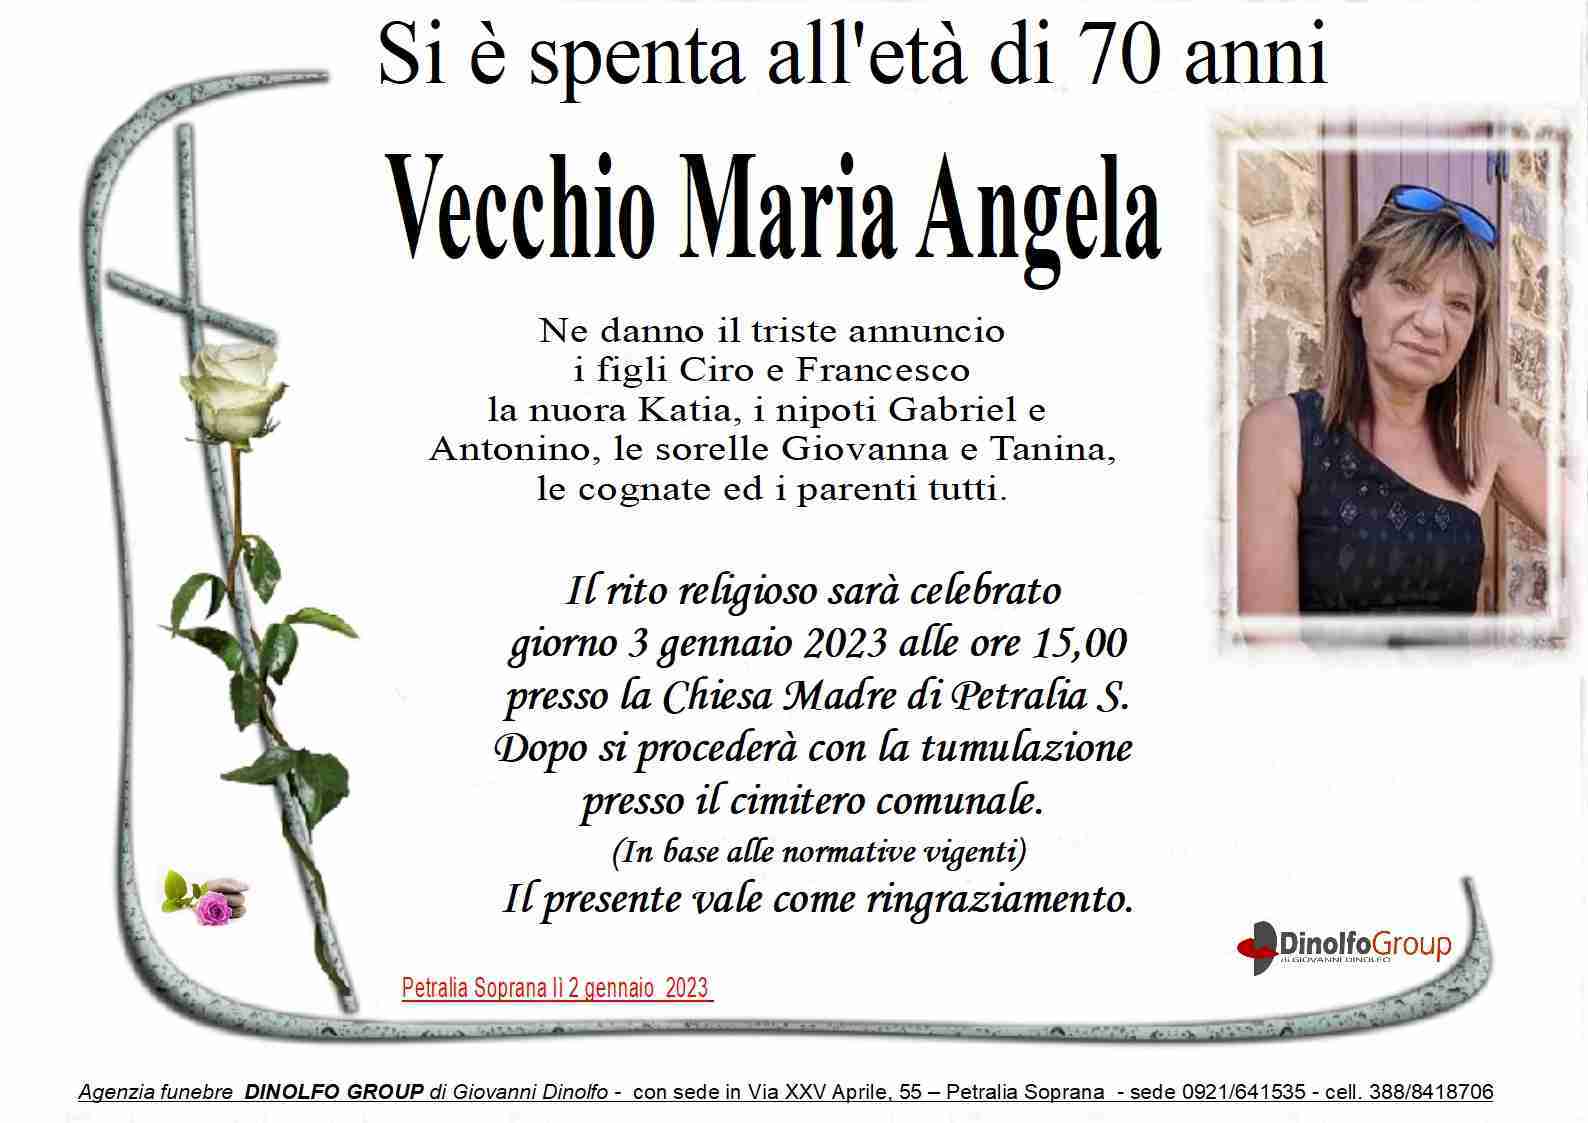 Maria Angela Vecchio